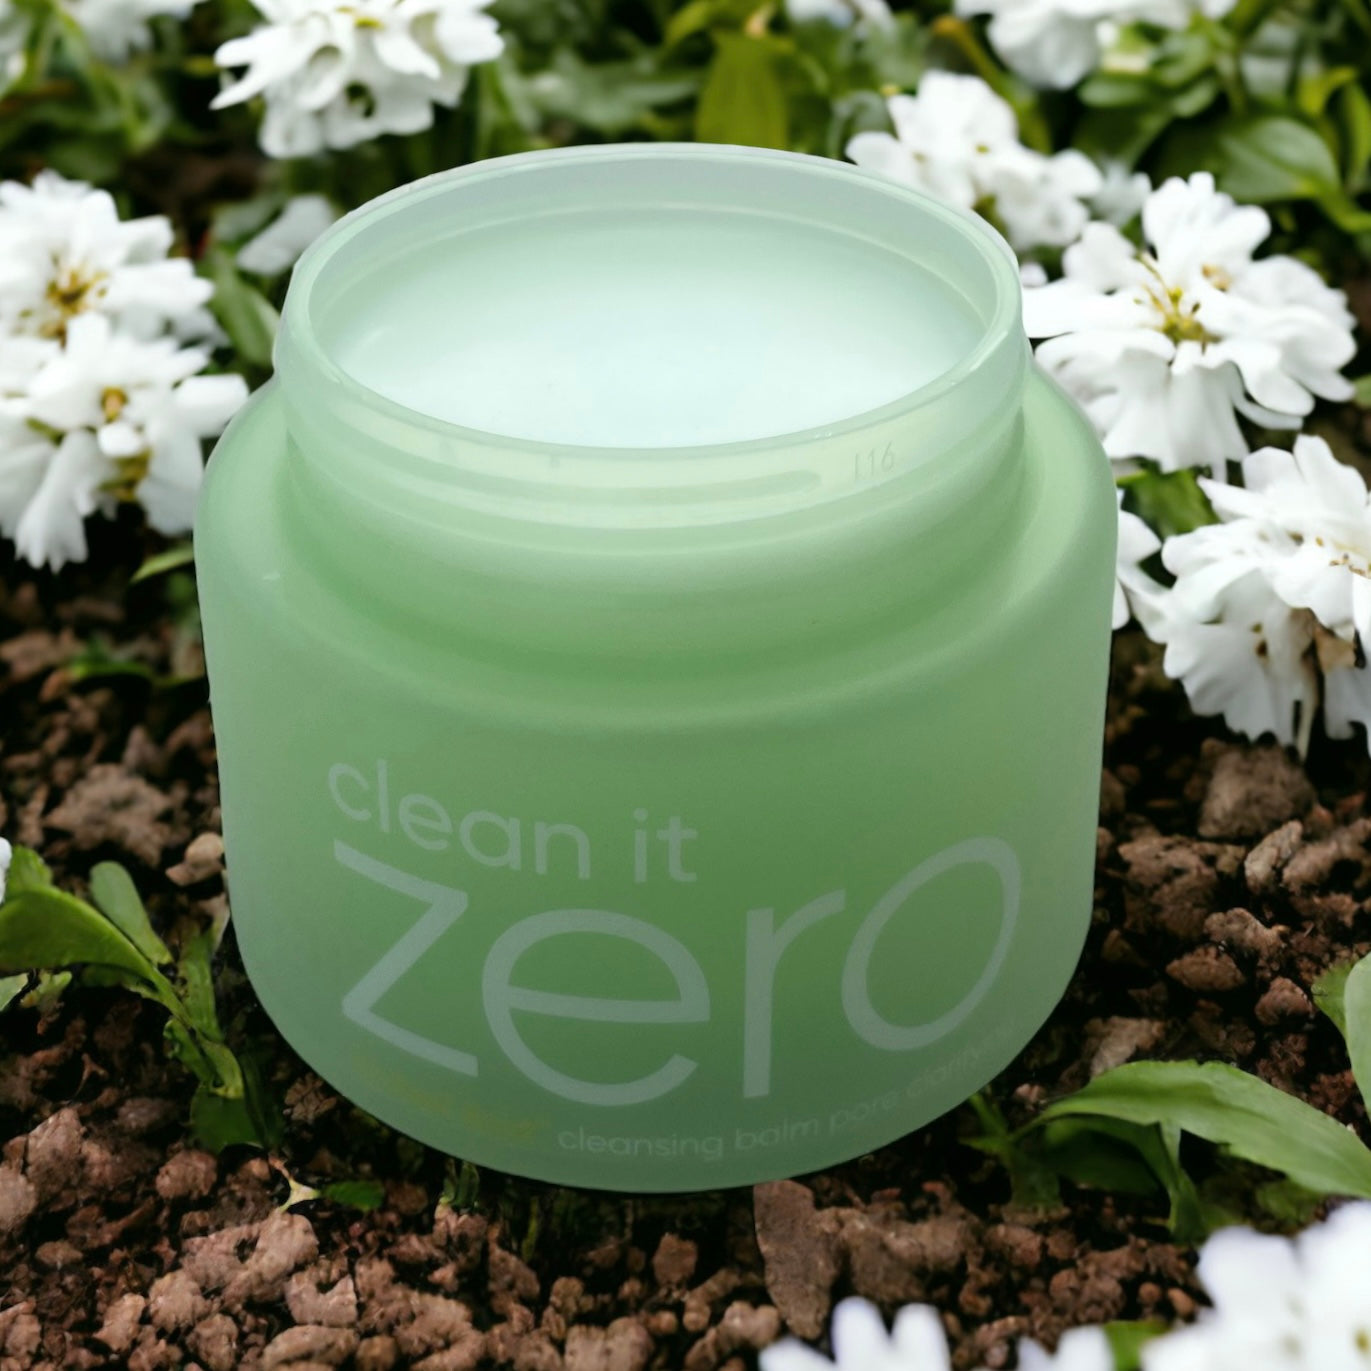 Clean It Zero, Cleansing Balm, Pore Clarifying, 3.38 fl oz (100 ml)